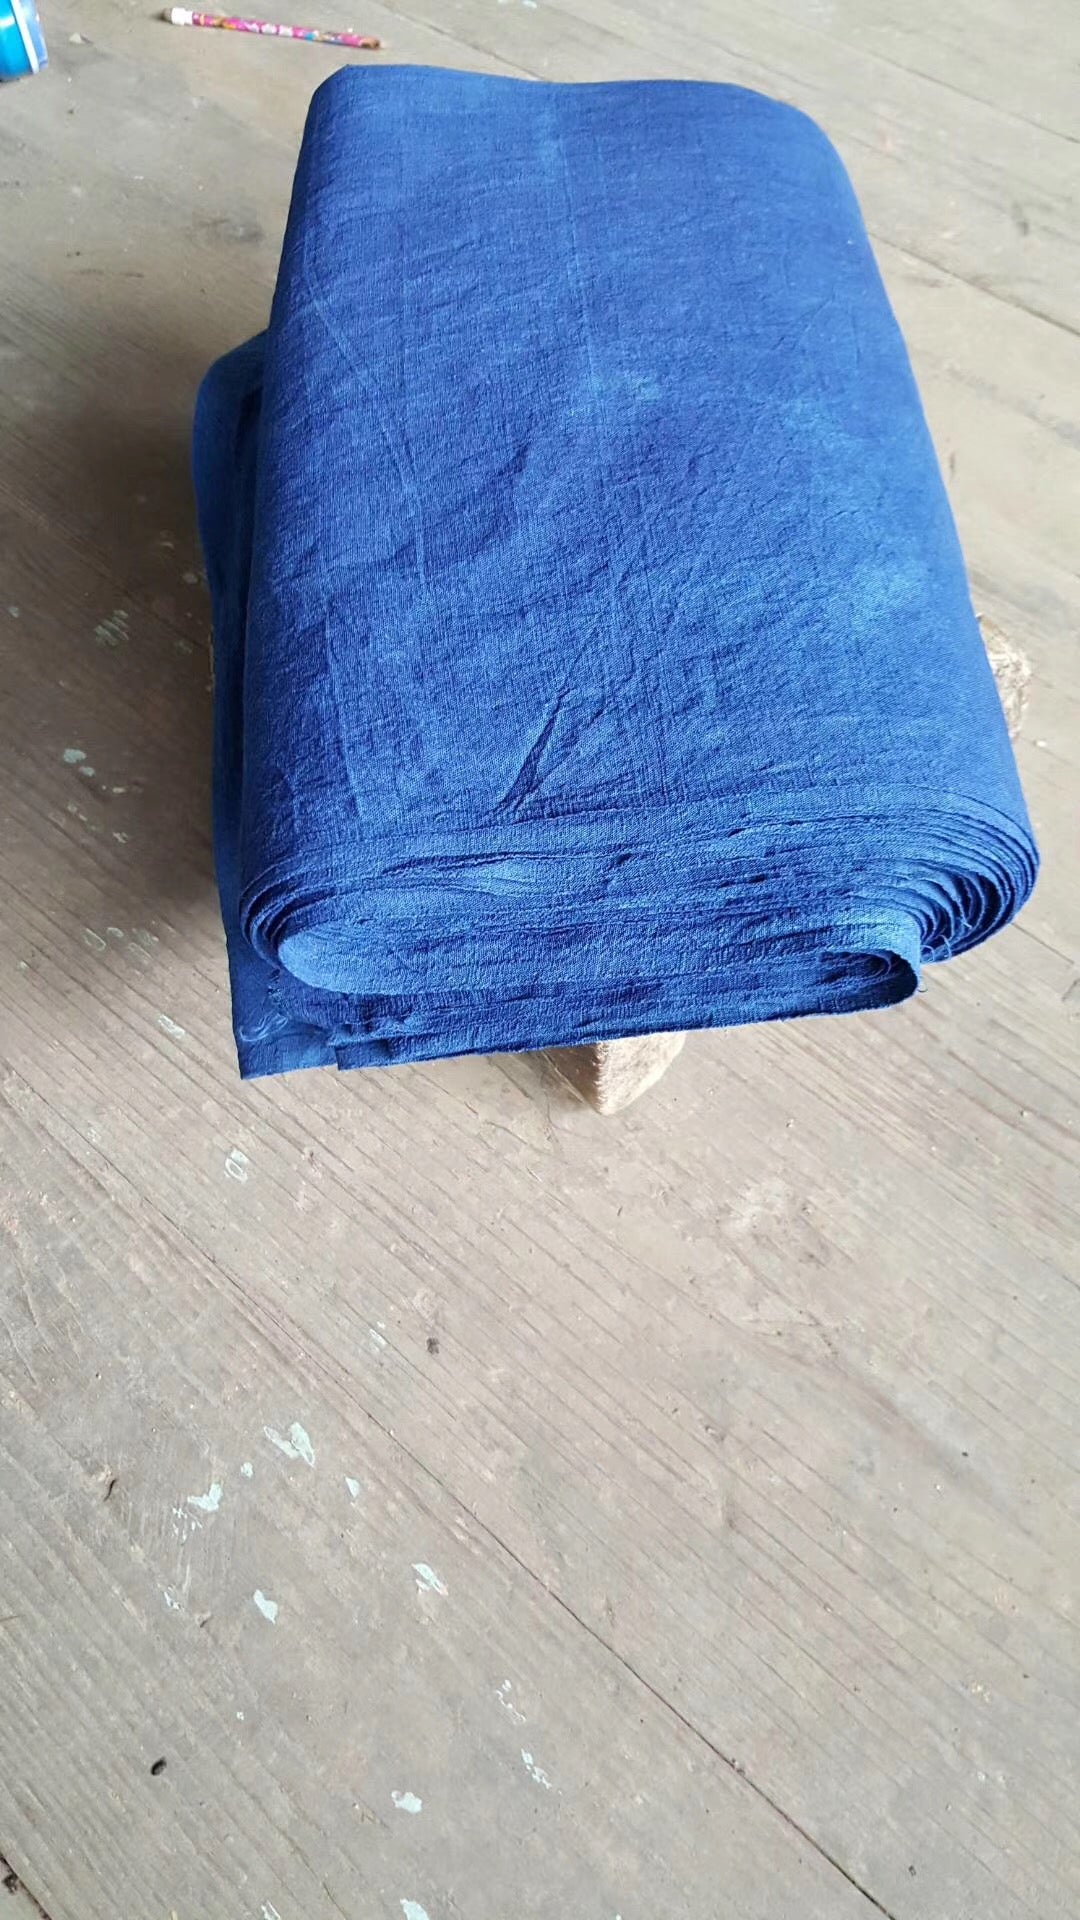 Indigo-dyed homespun blue fabric